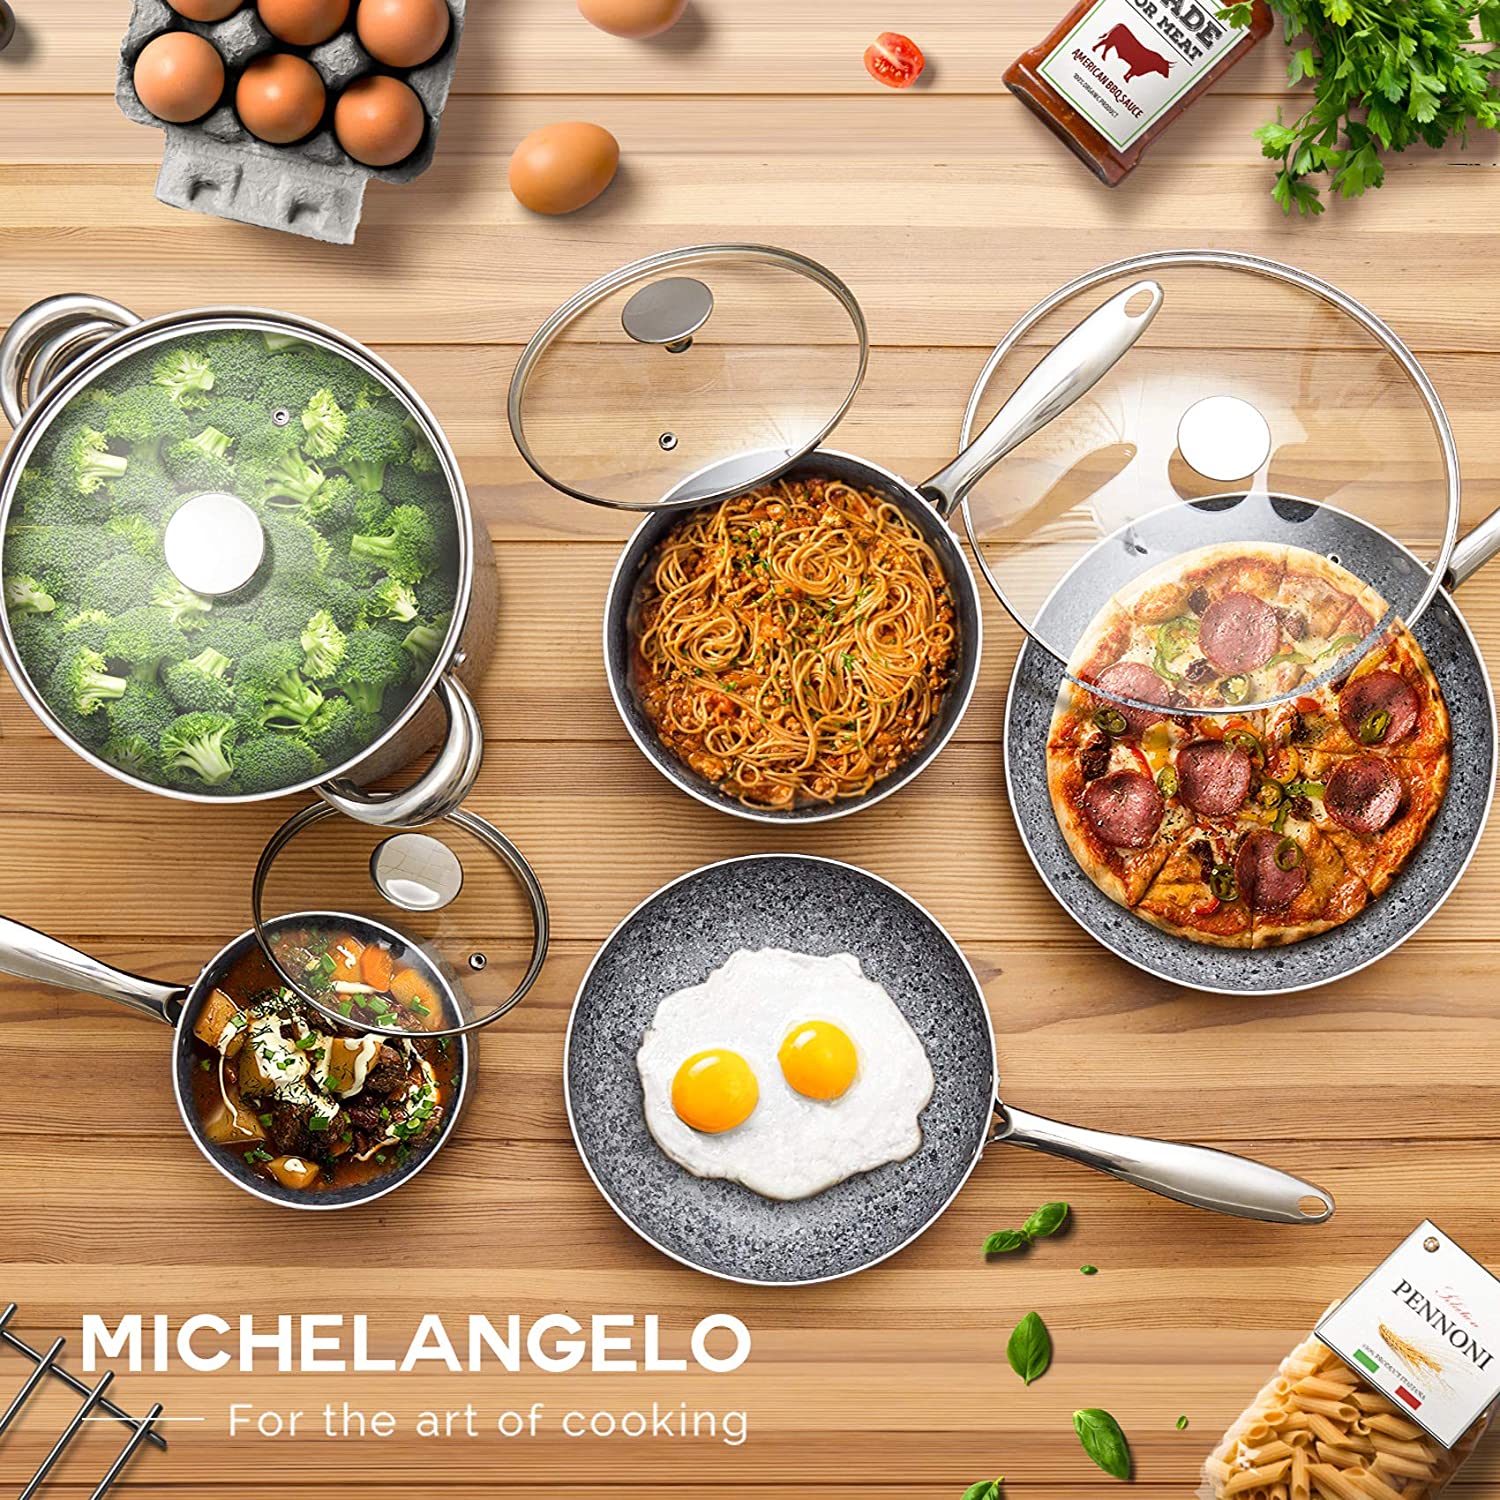 MICHELANGELO Pots and Pans Set Nonstick, 12 Piece Kitchen Cookware